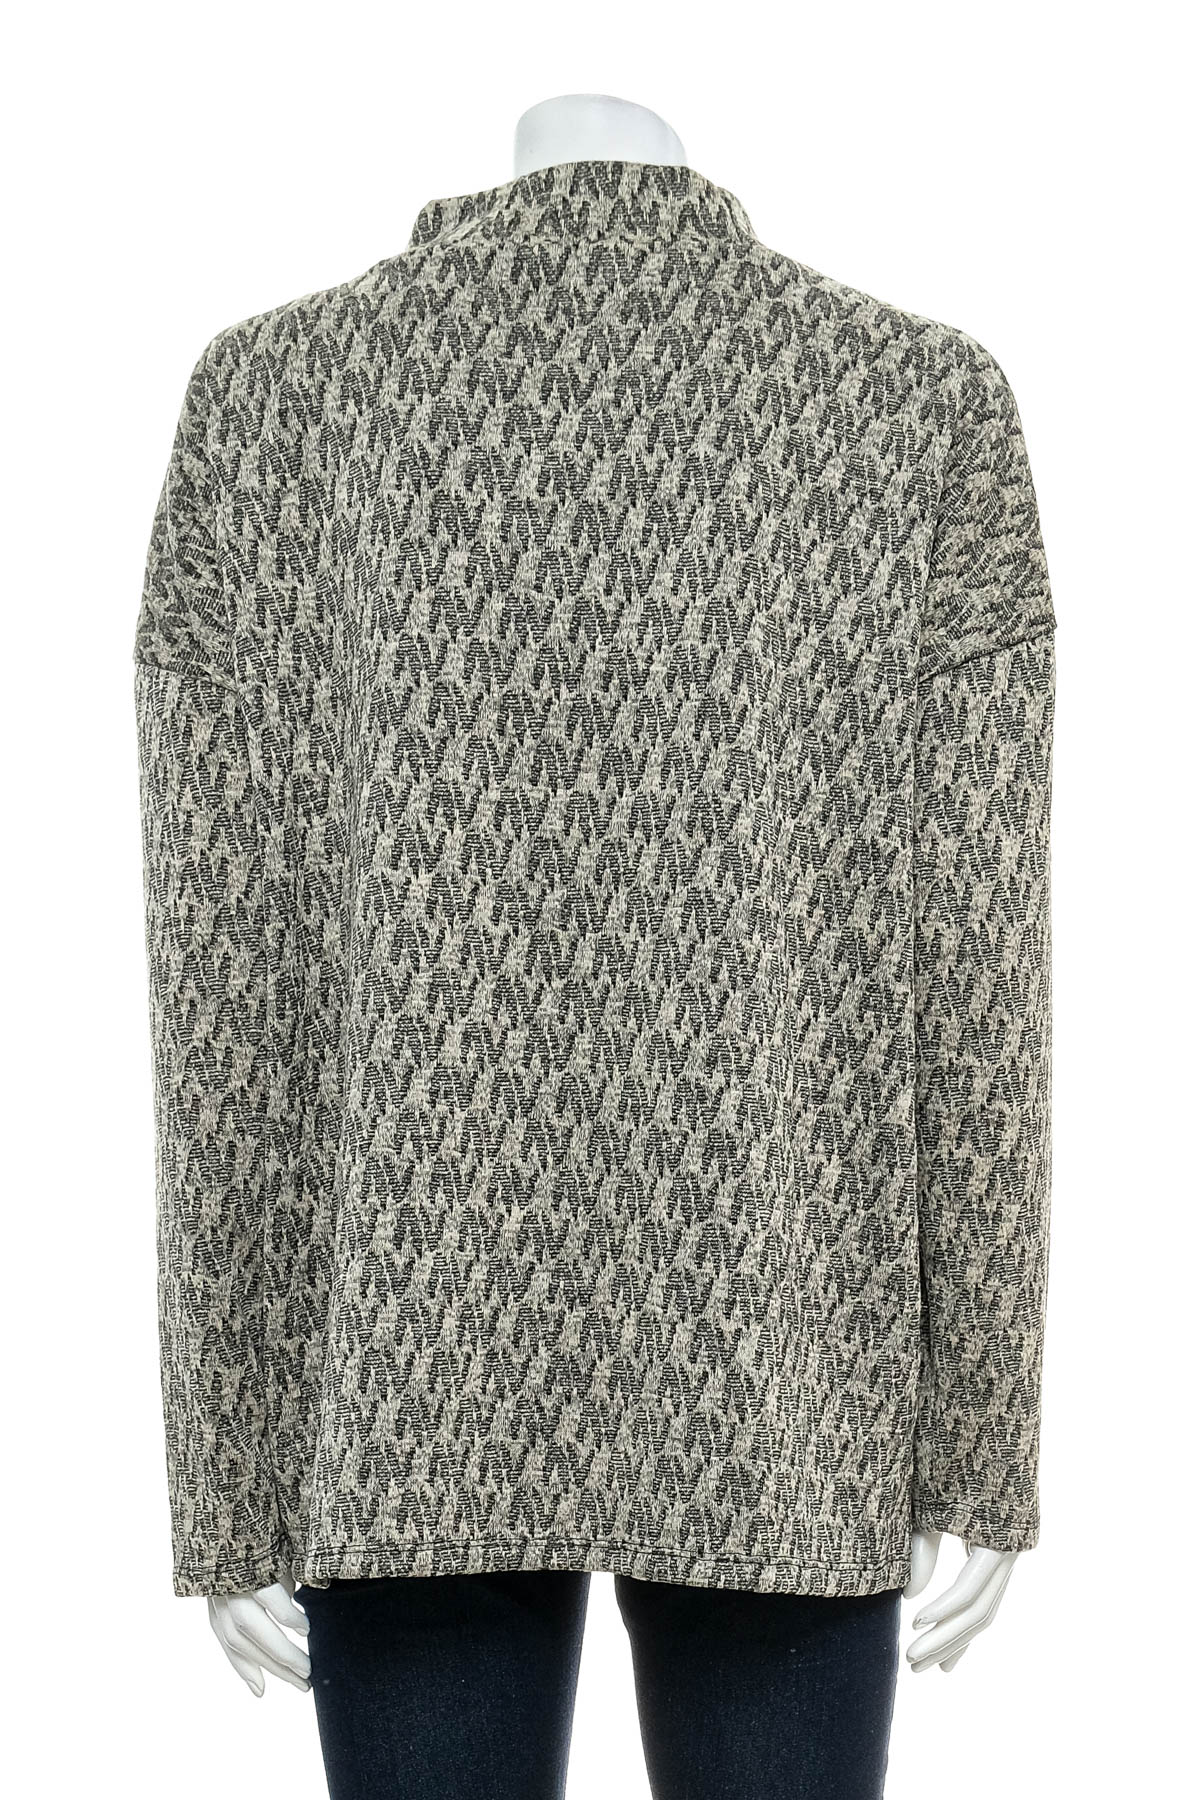 Women's sweater - Laura Torelli - 1